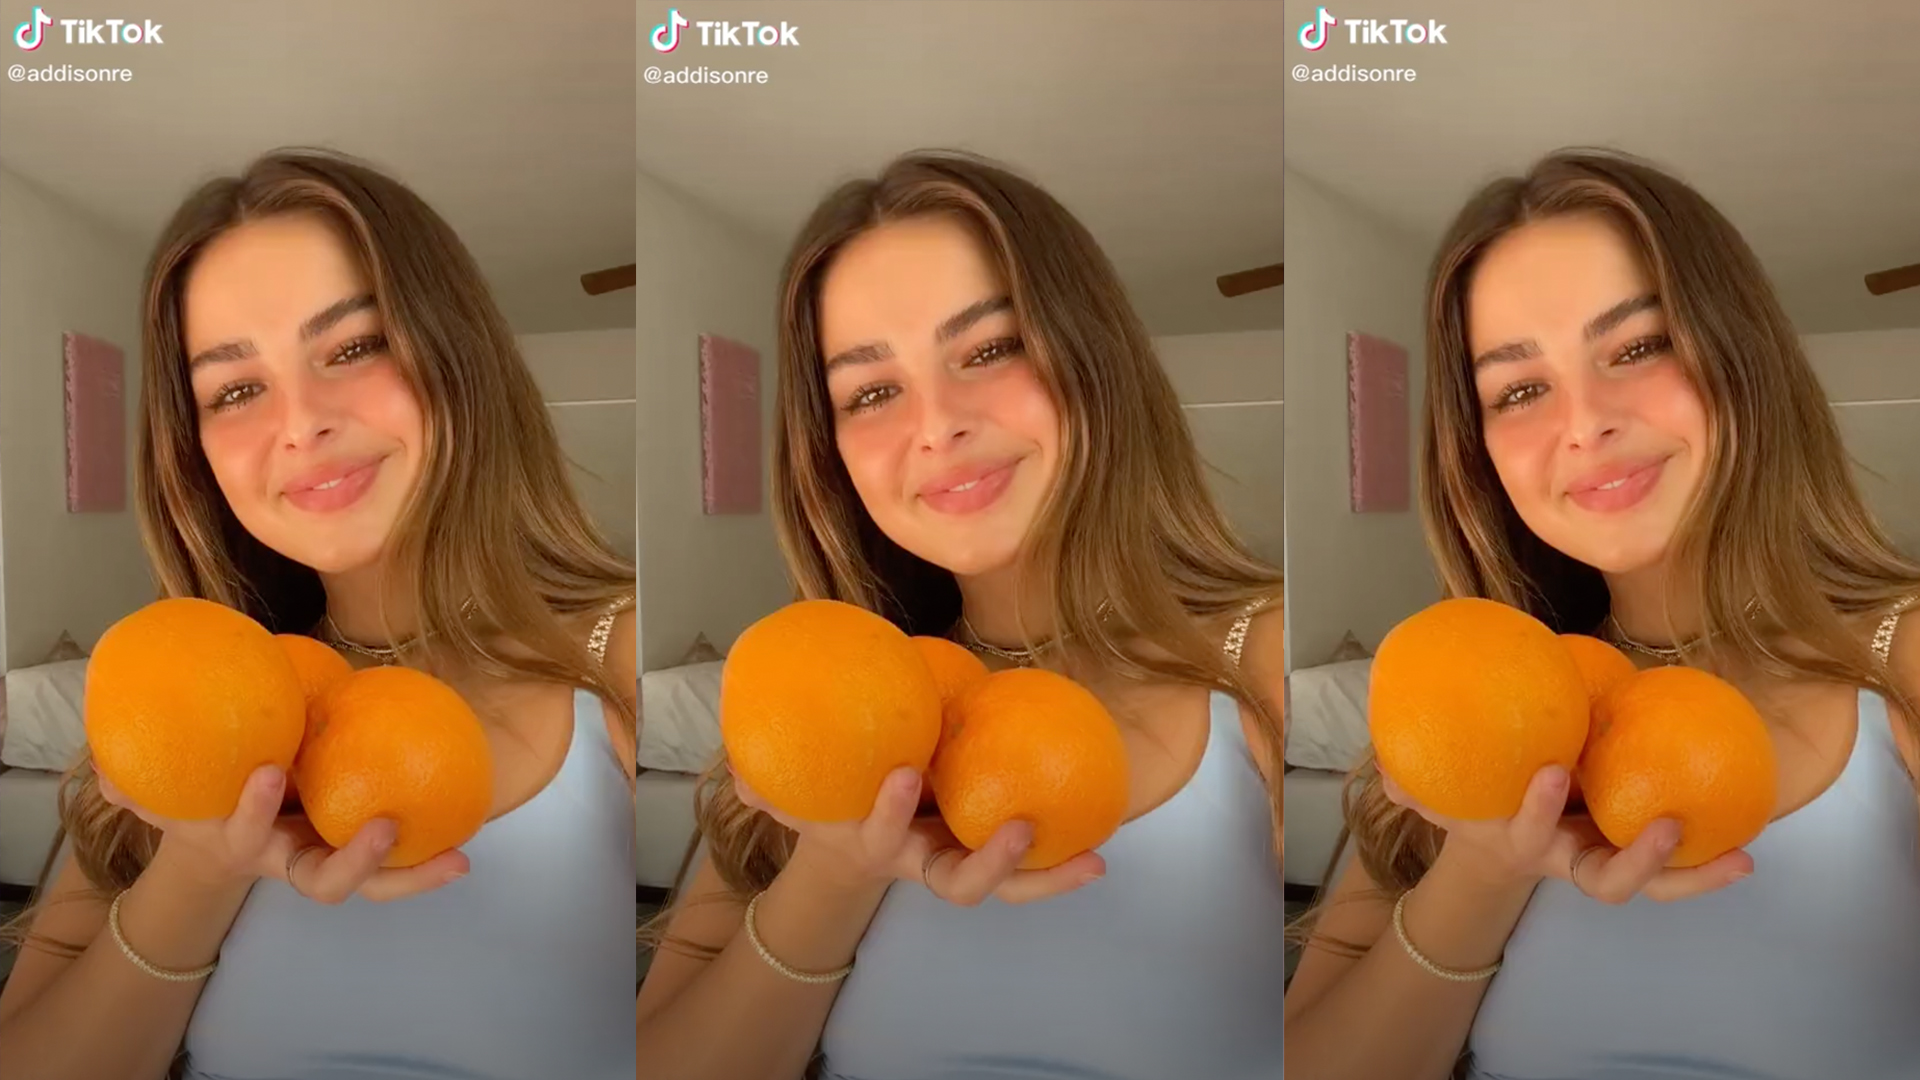 Addison Rae juggles oranges